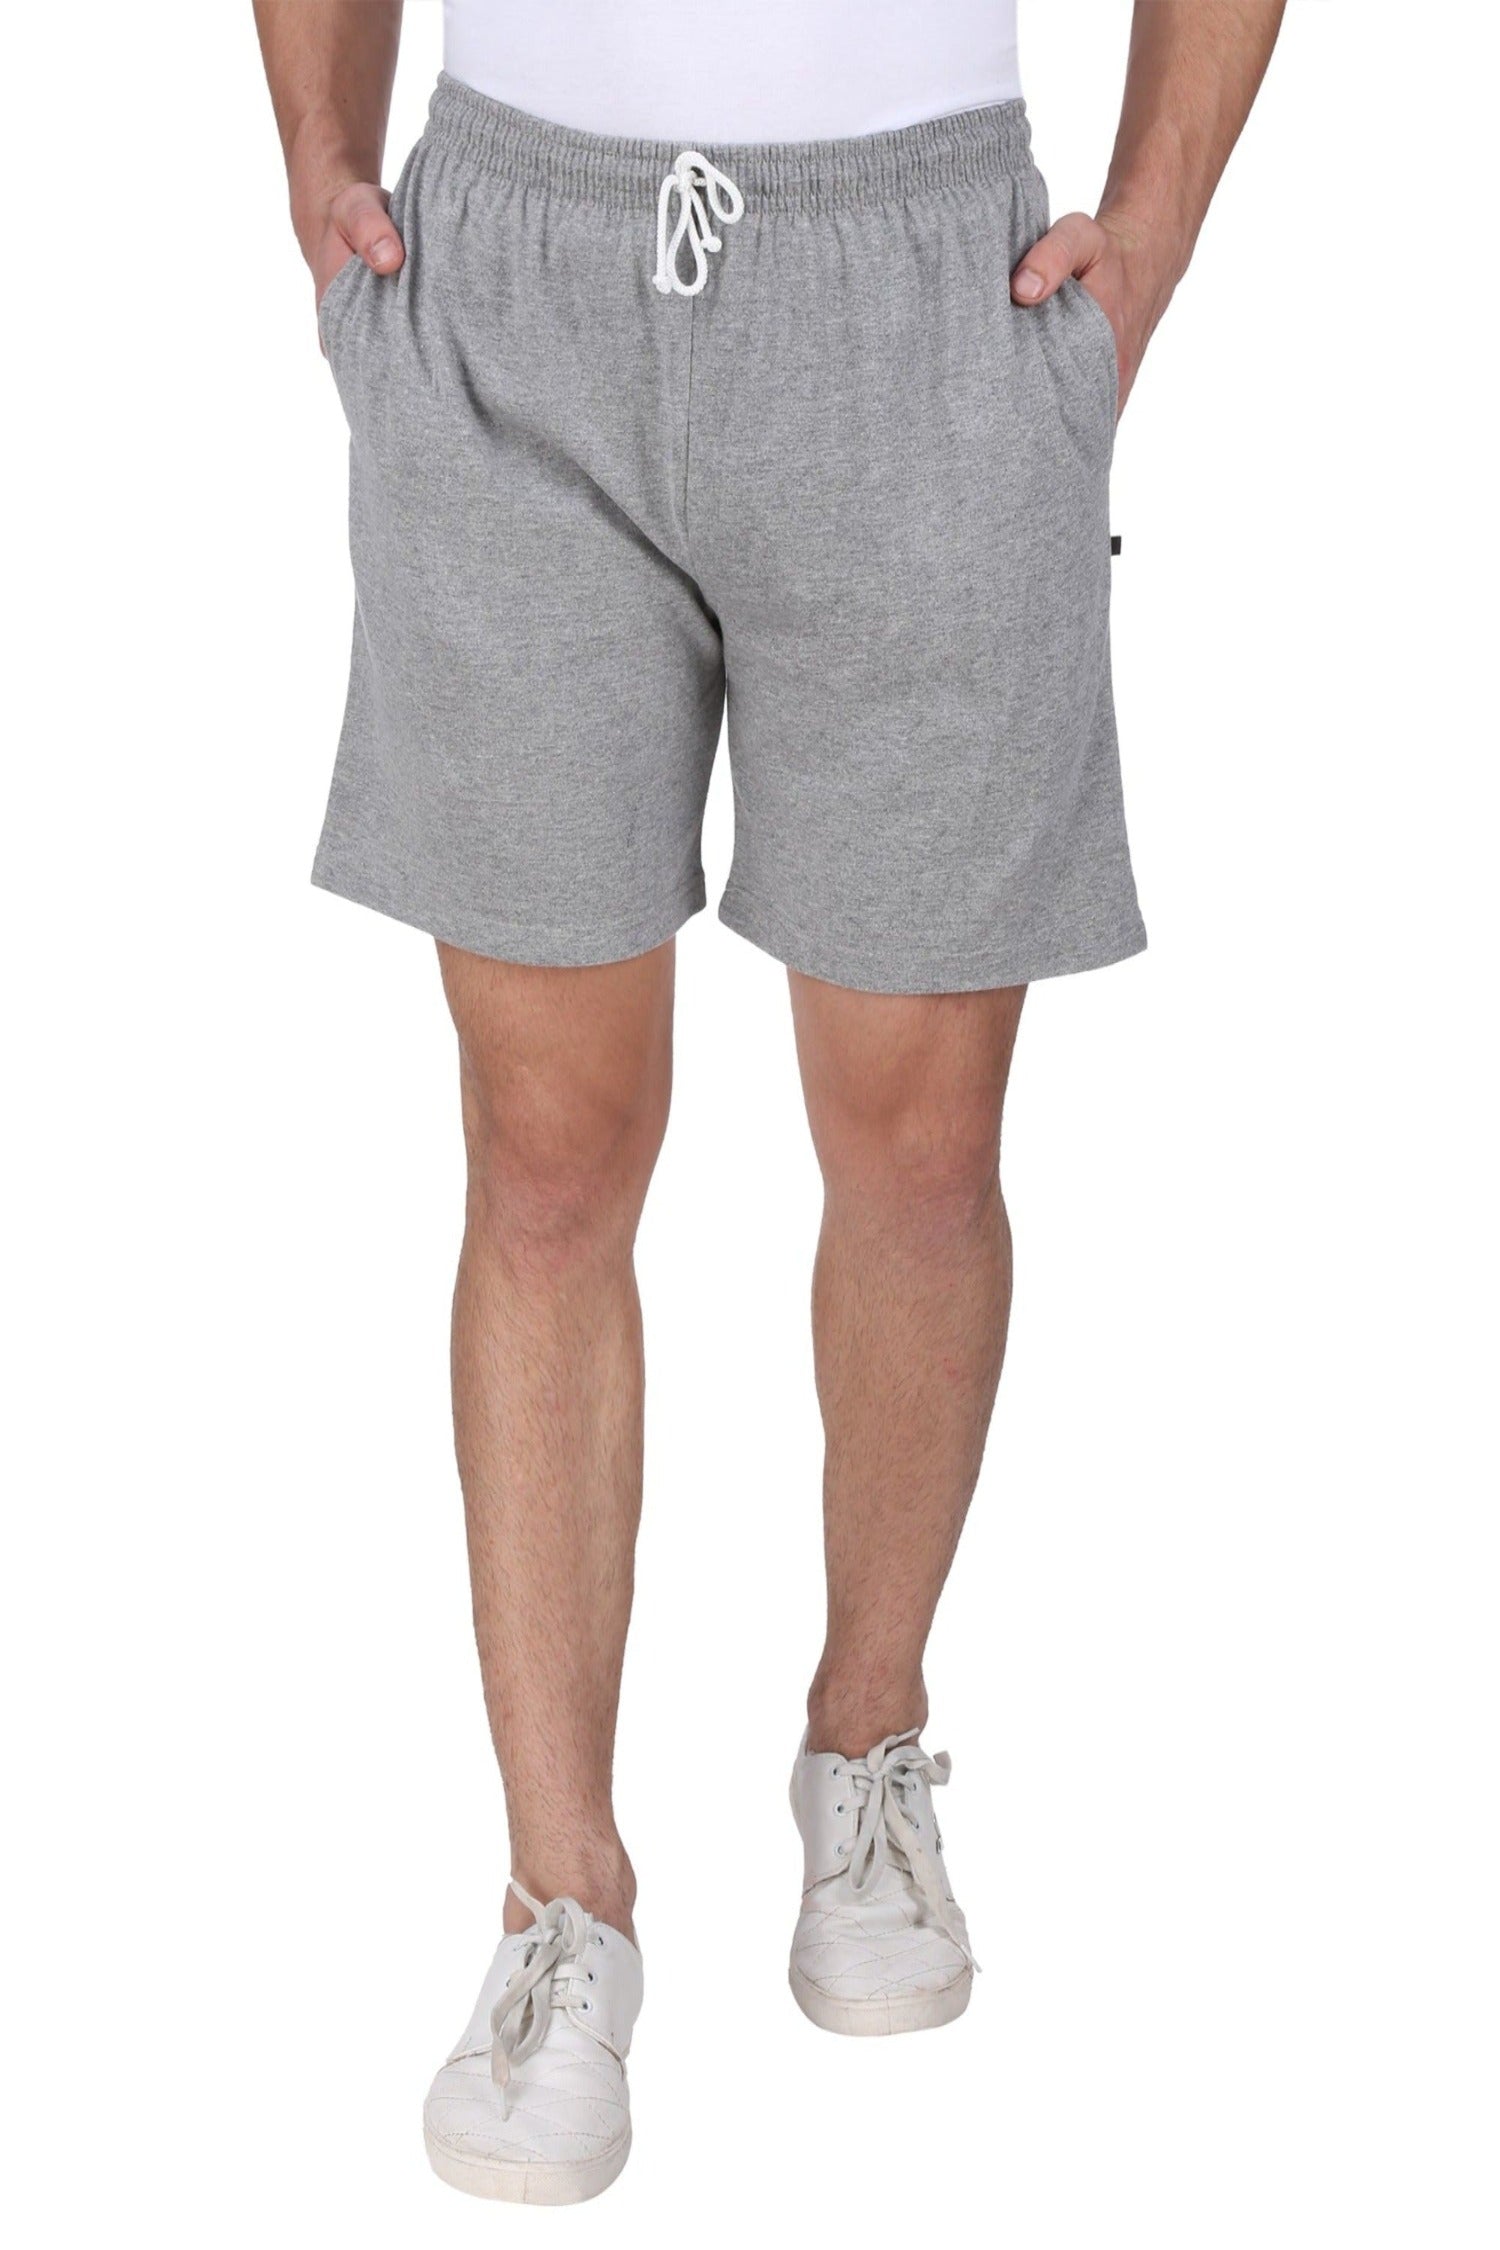 Men’s Cotton Long Shorts | GREY , front view